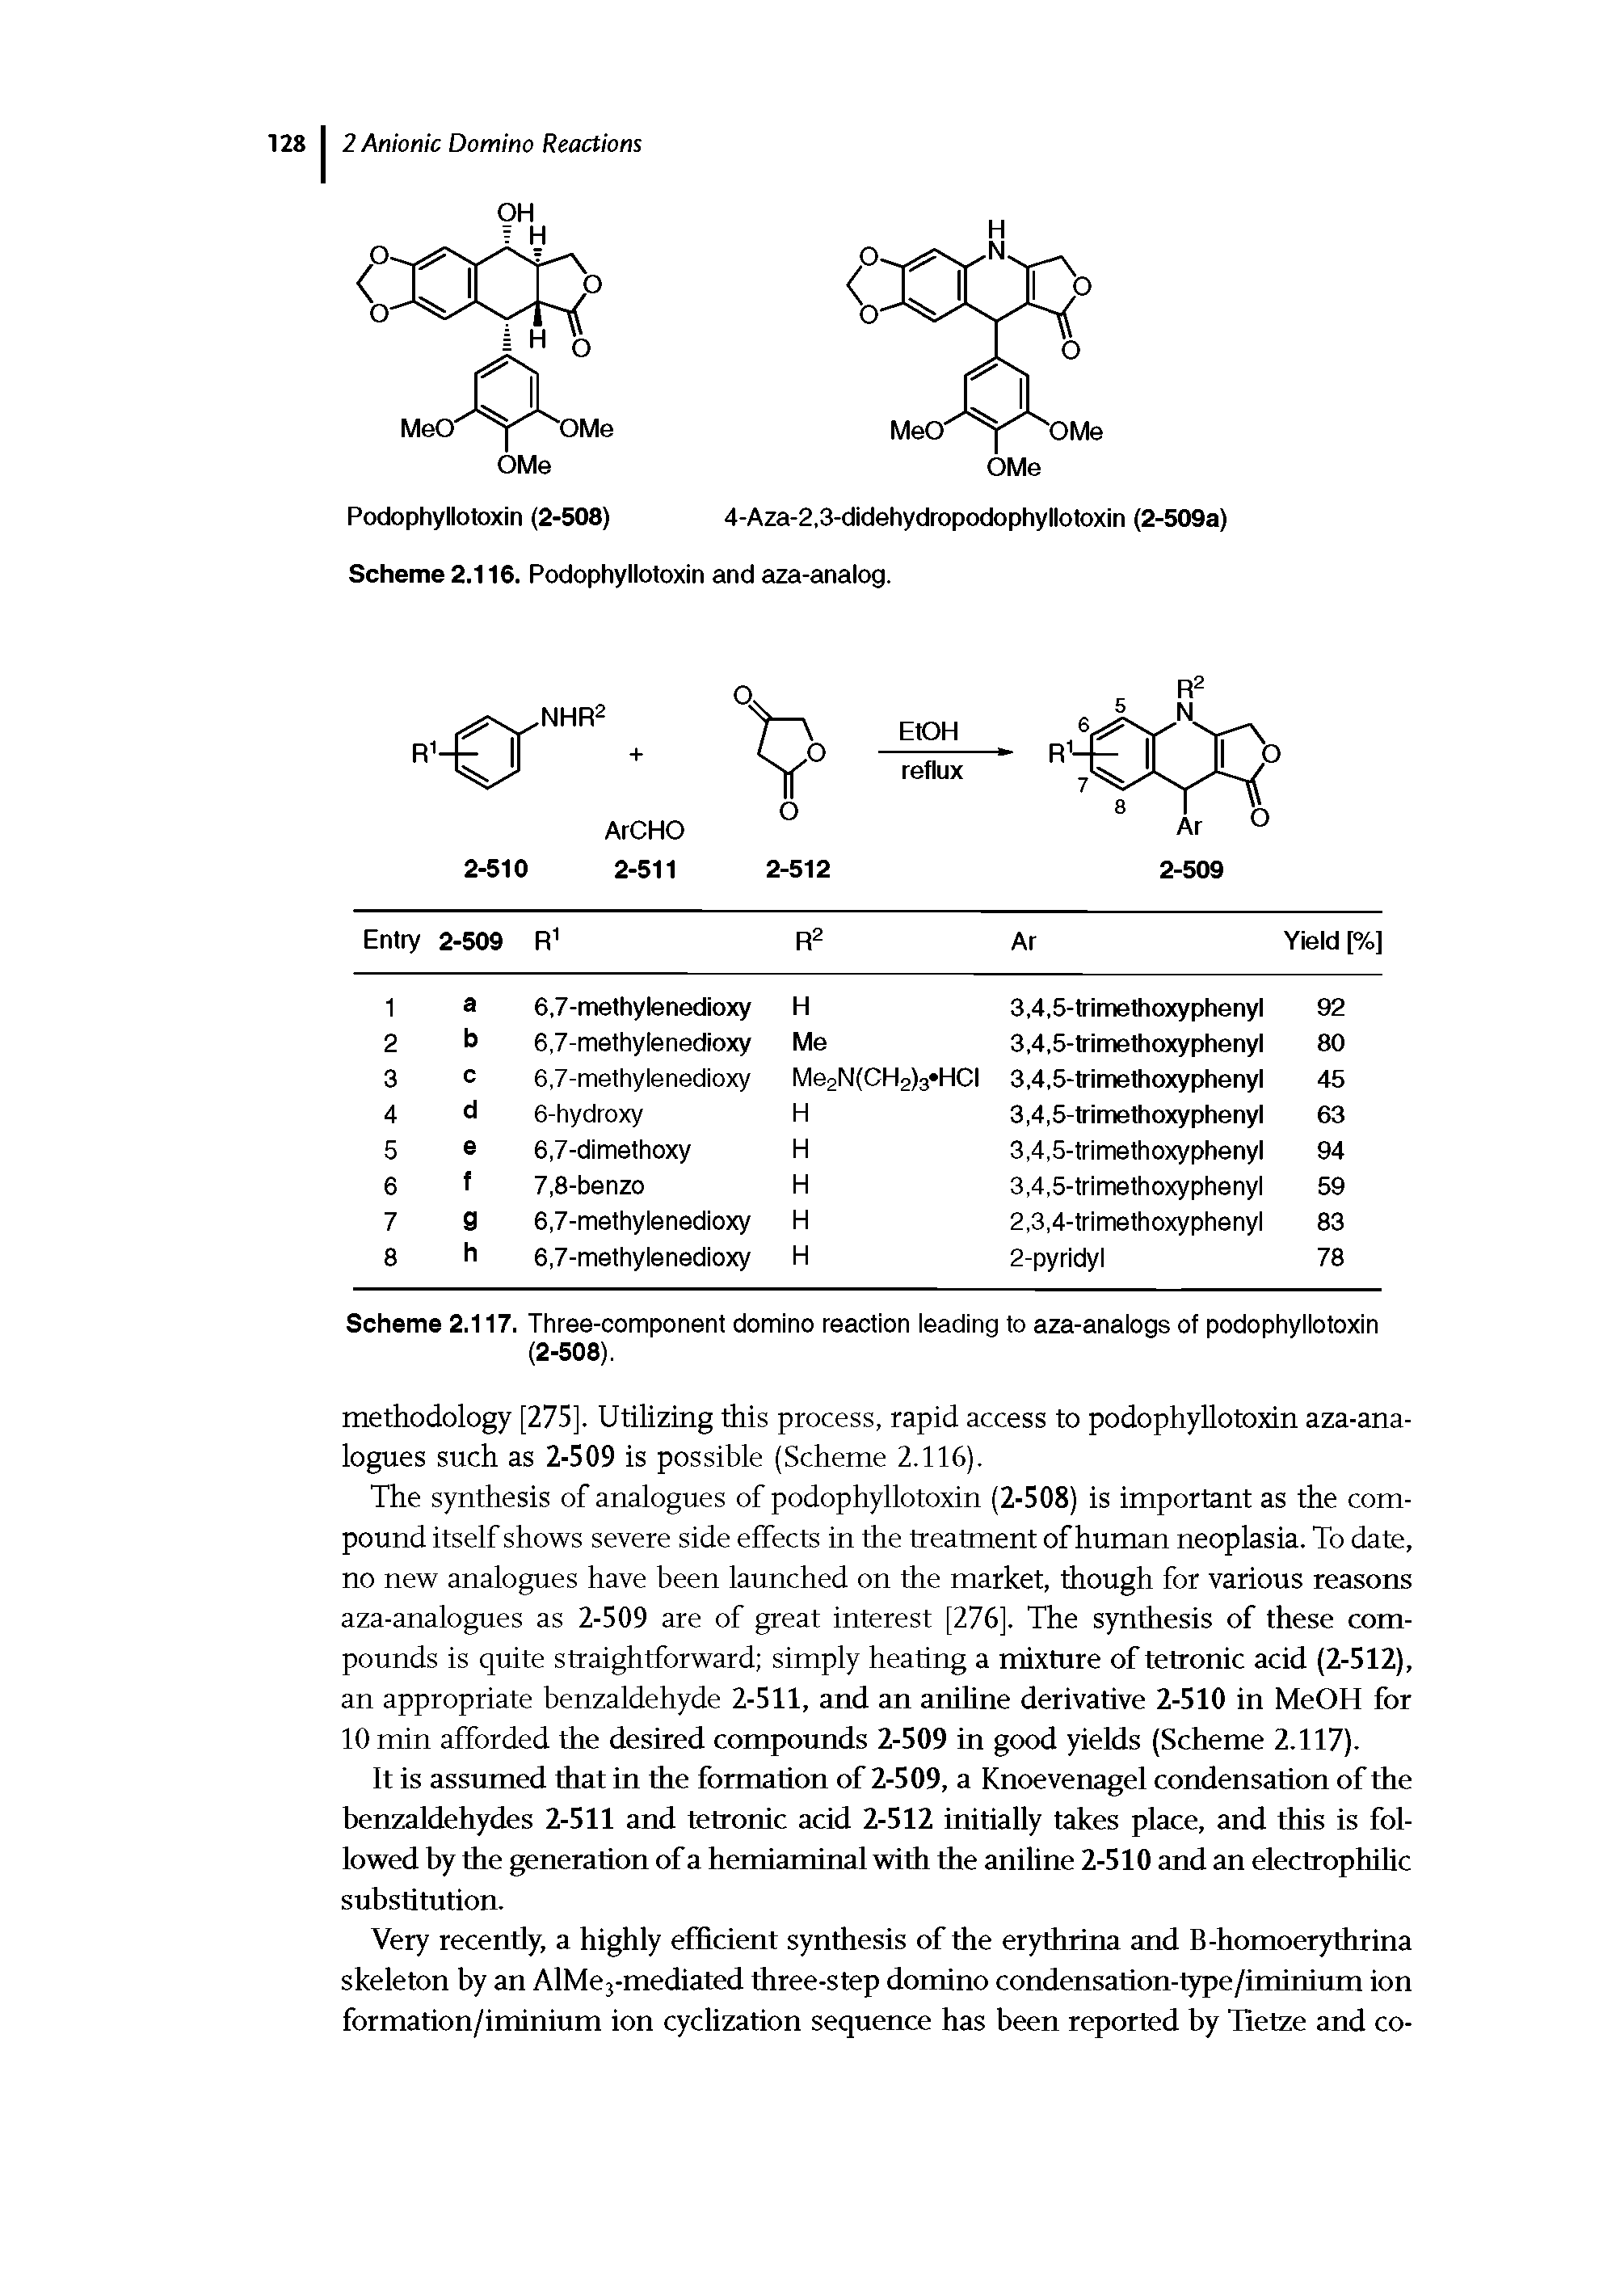 Scheme 2.117. Three-component domino reaction leading to aza-analogs of podophyllotoxin (2-508).